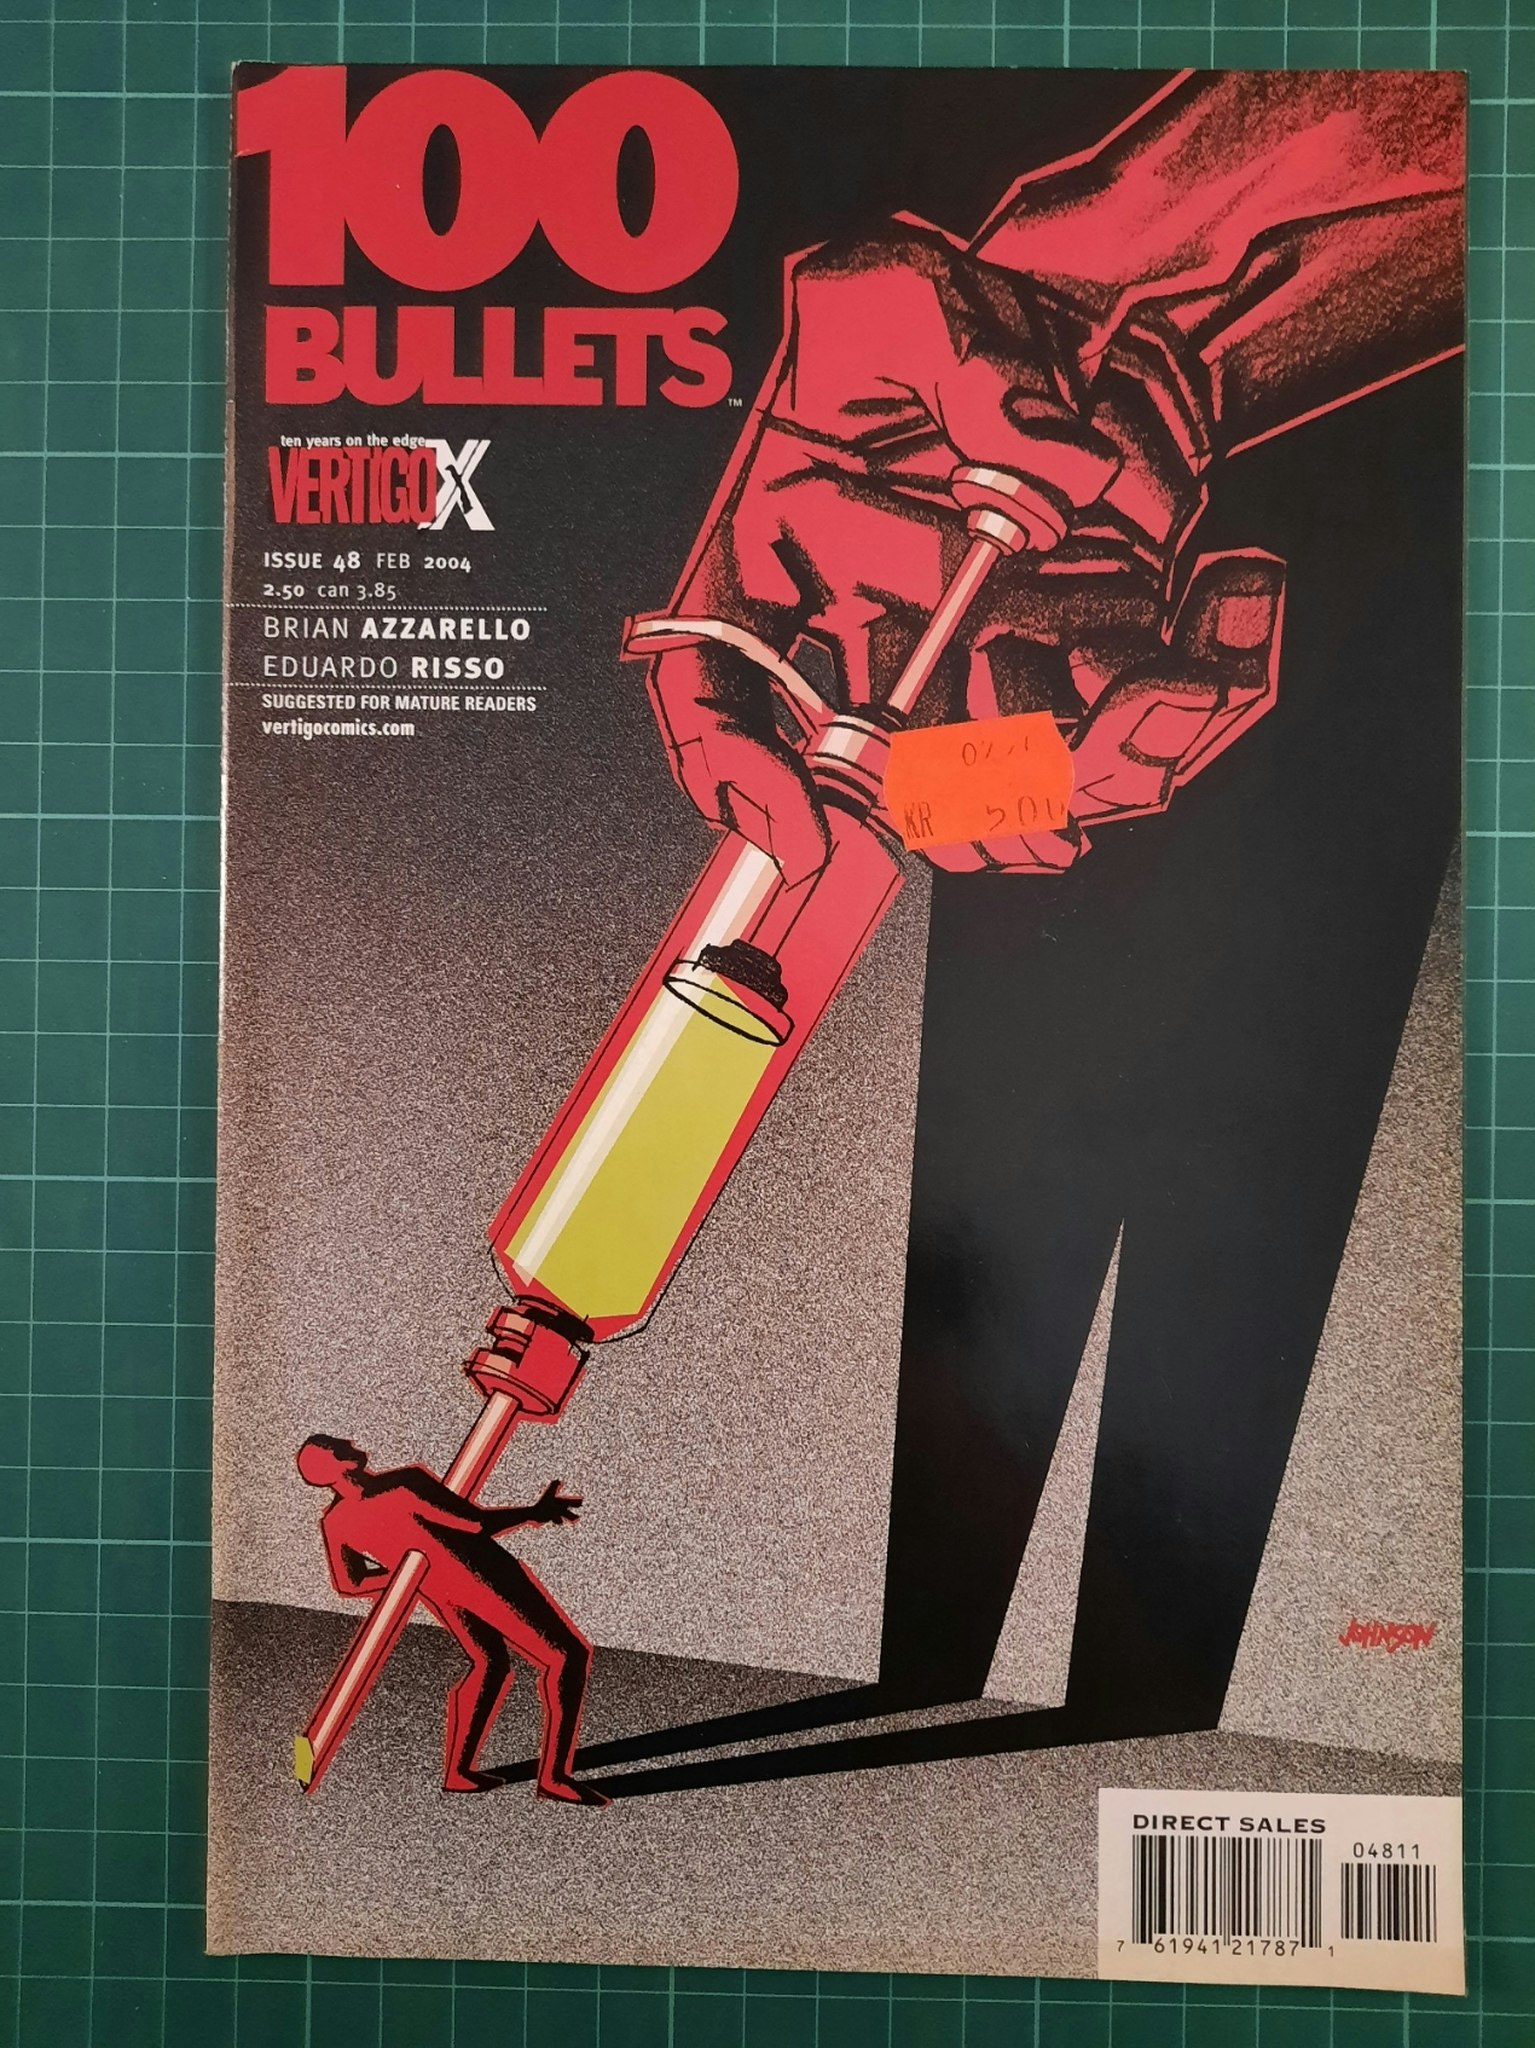 100 Bullets #48